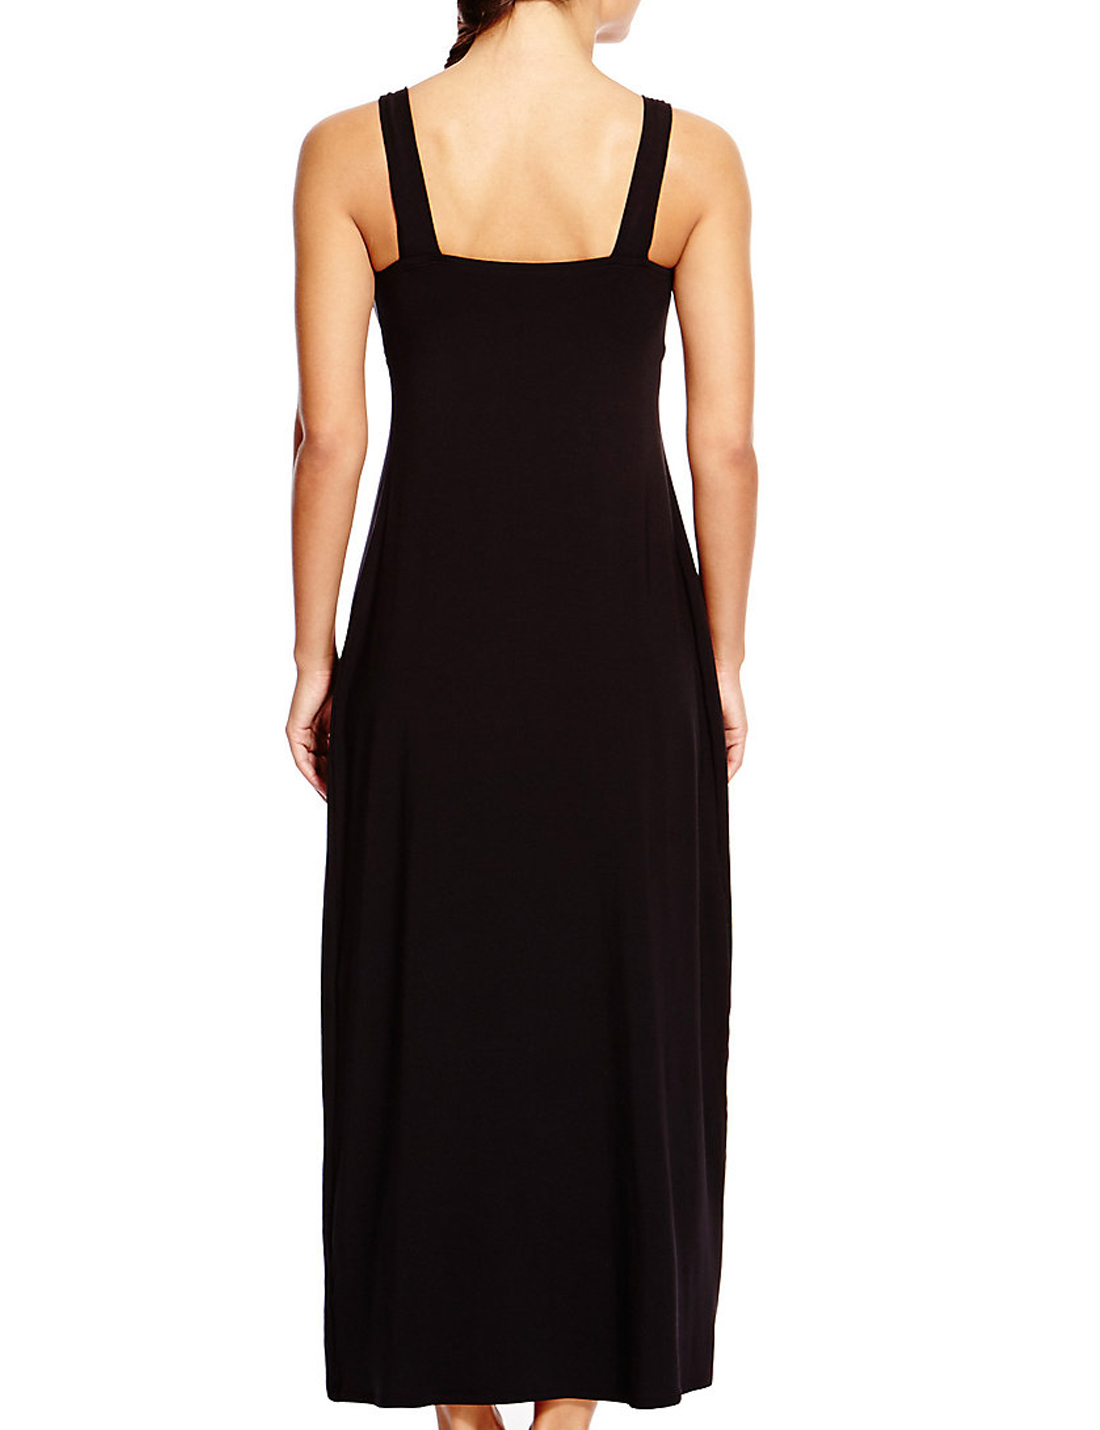 4utograph BLACK Modal Rich Grecian Maxi Dress - Size 10 to 20